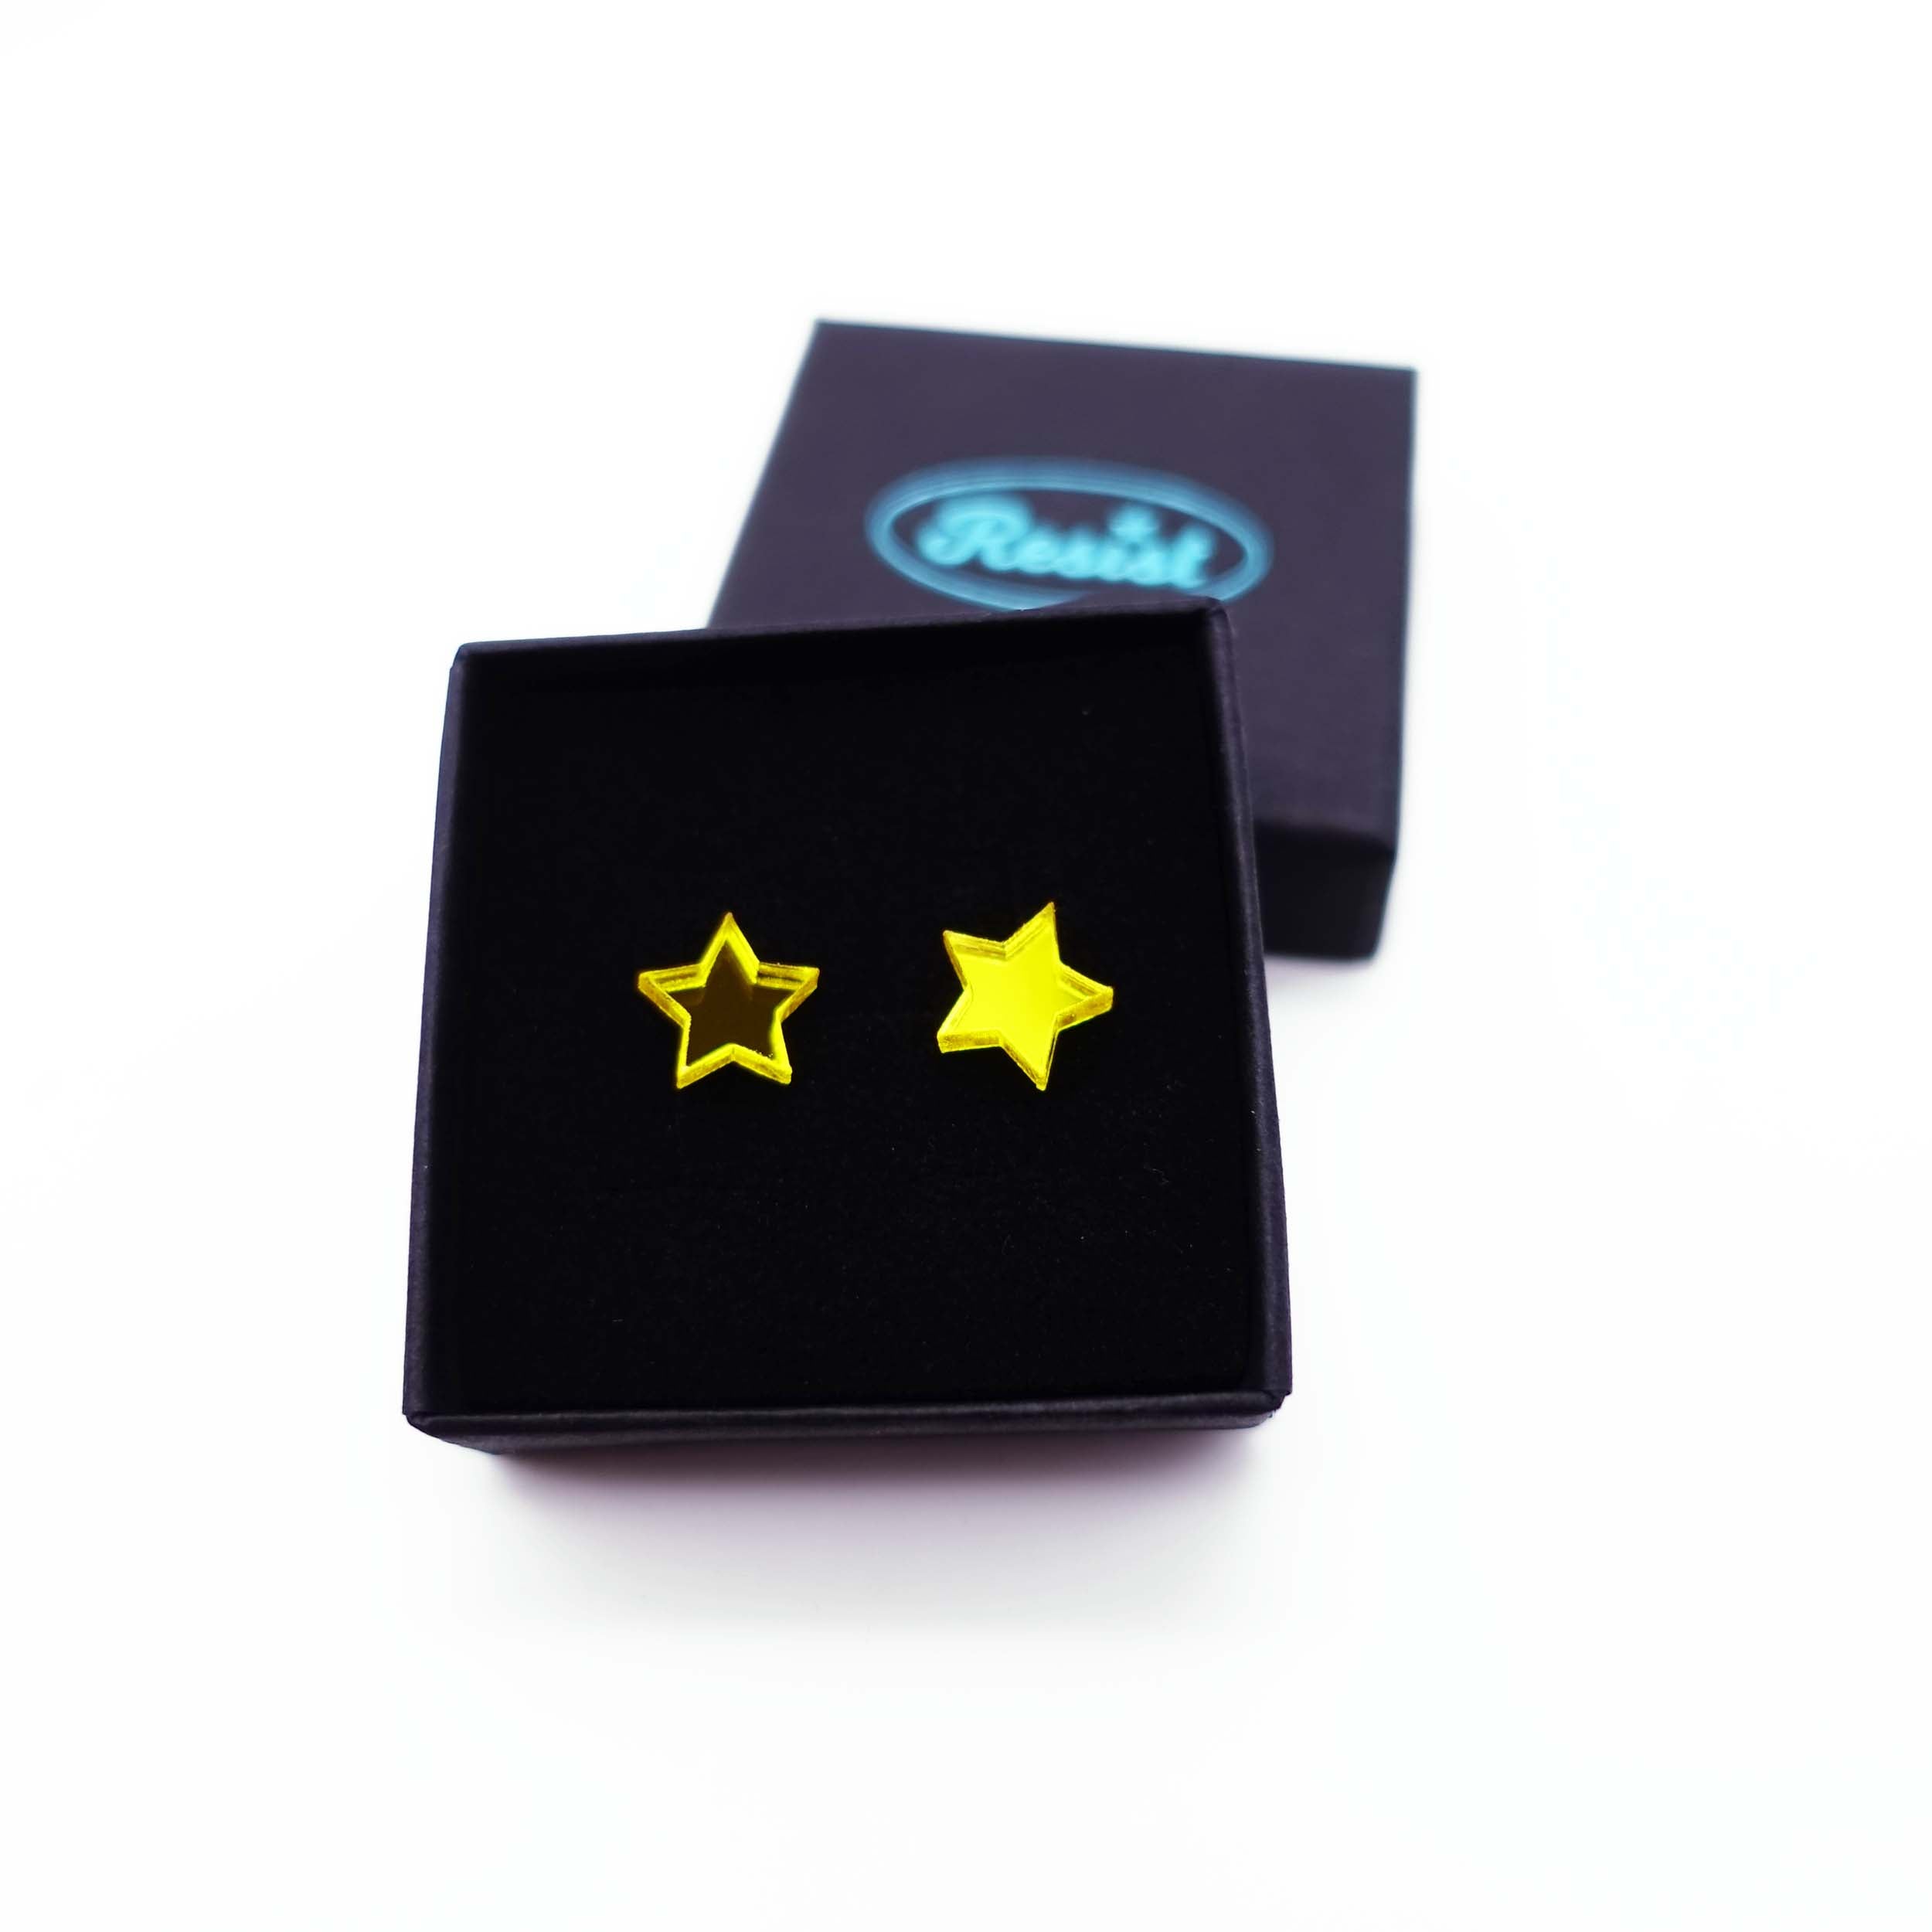 Yellow mirror star stud earrings shown in box. 